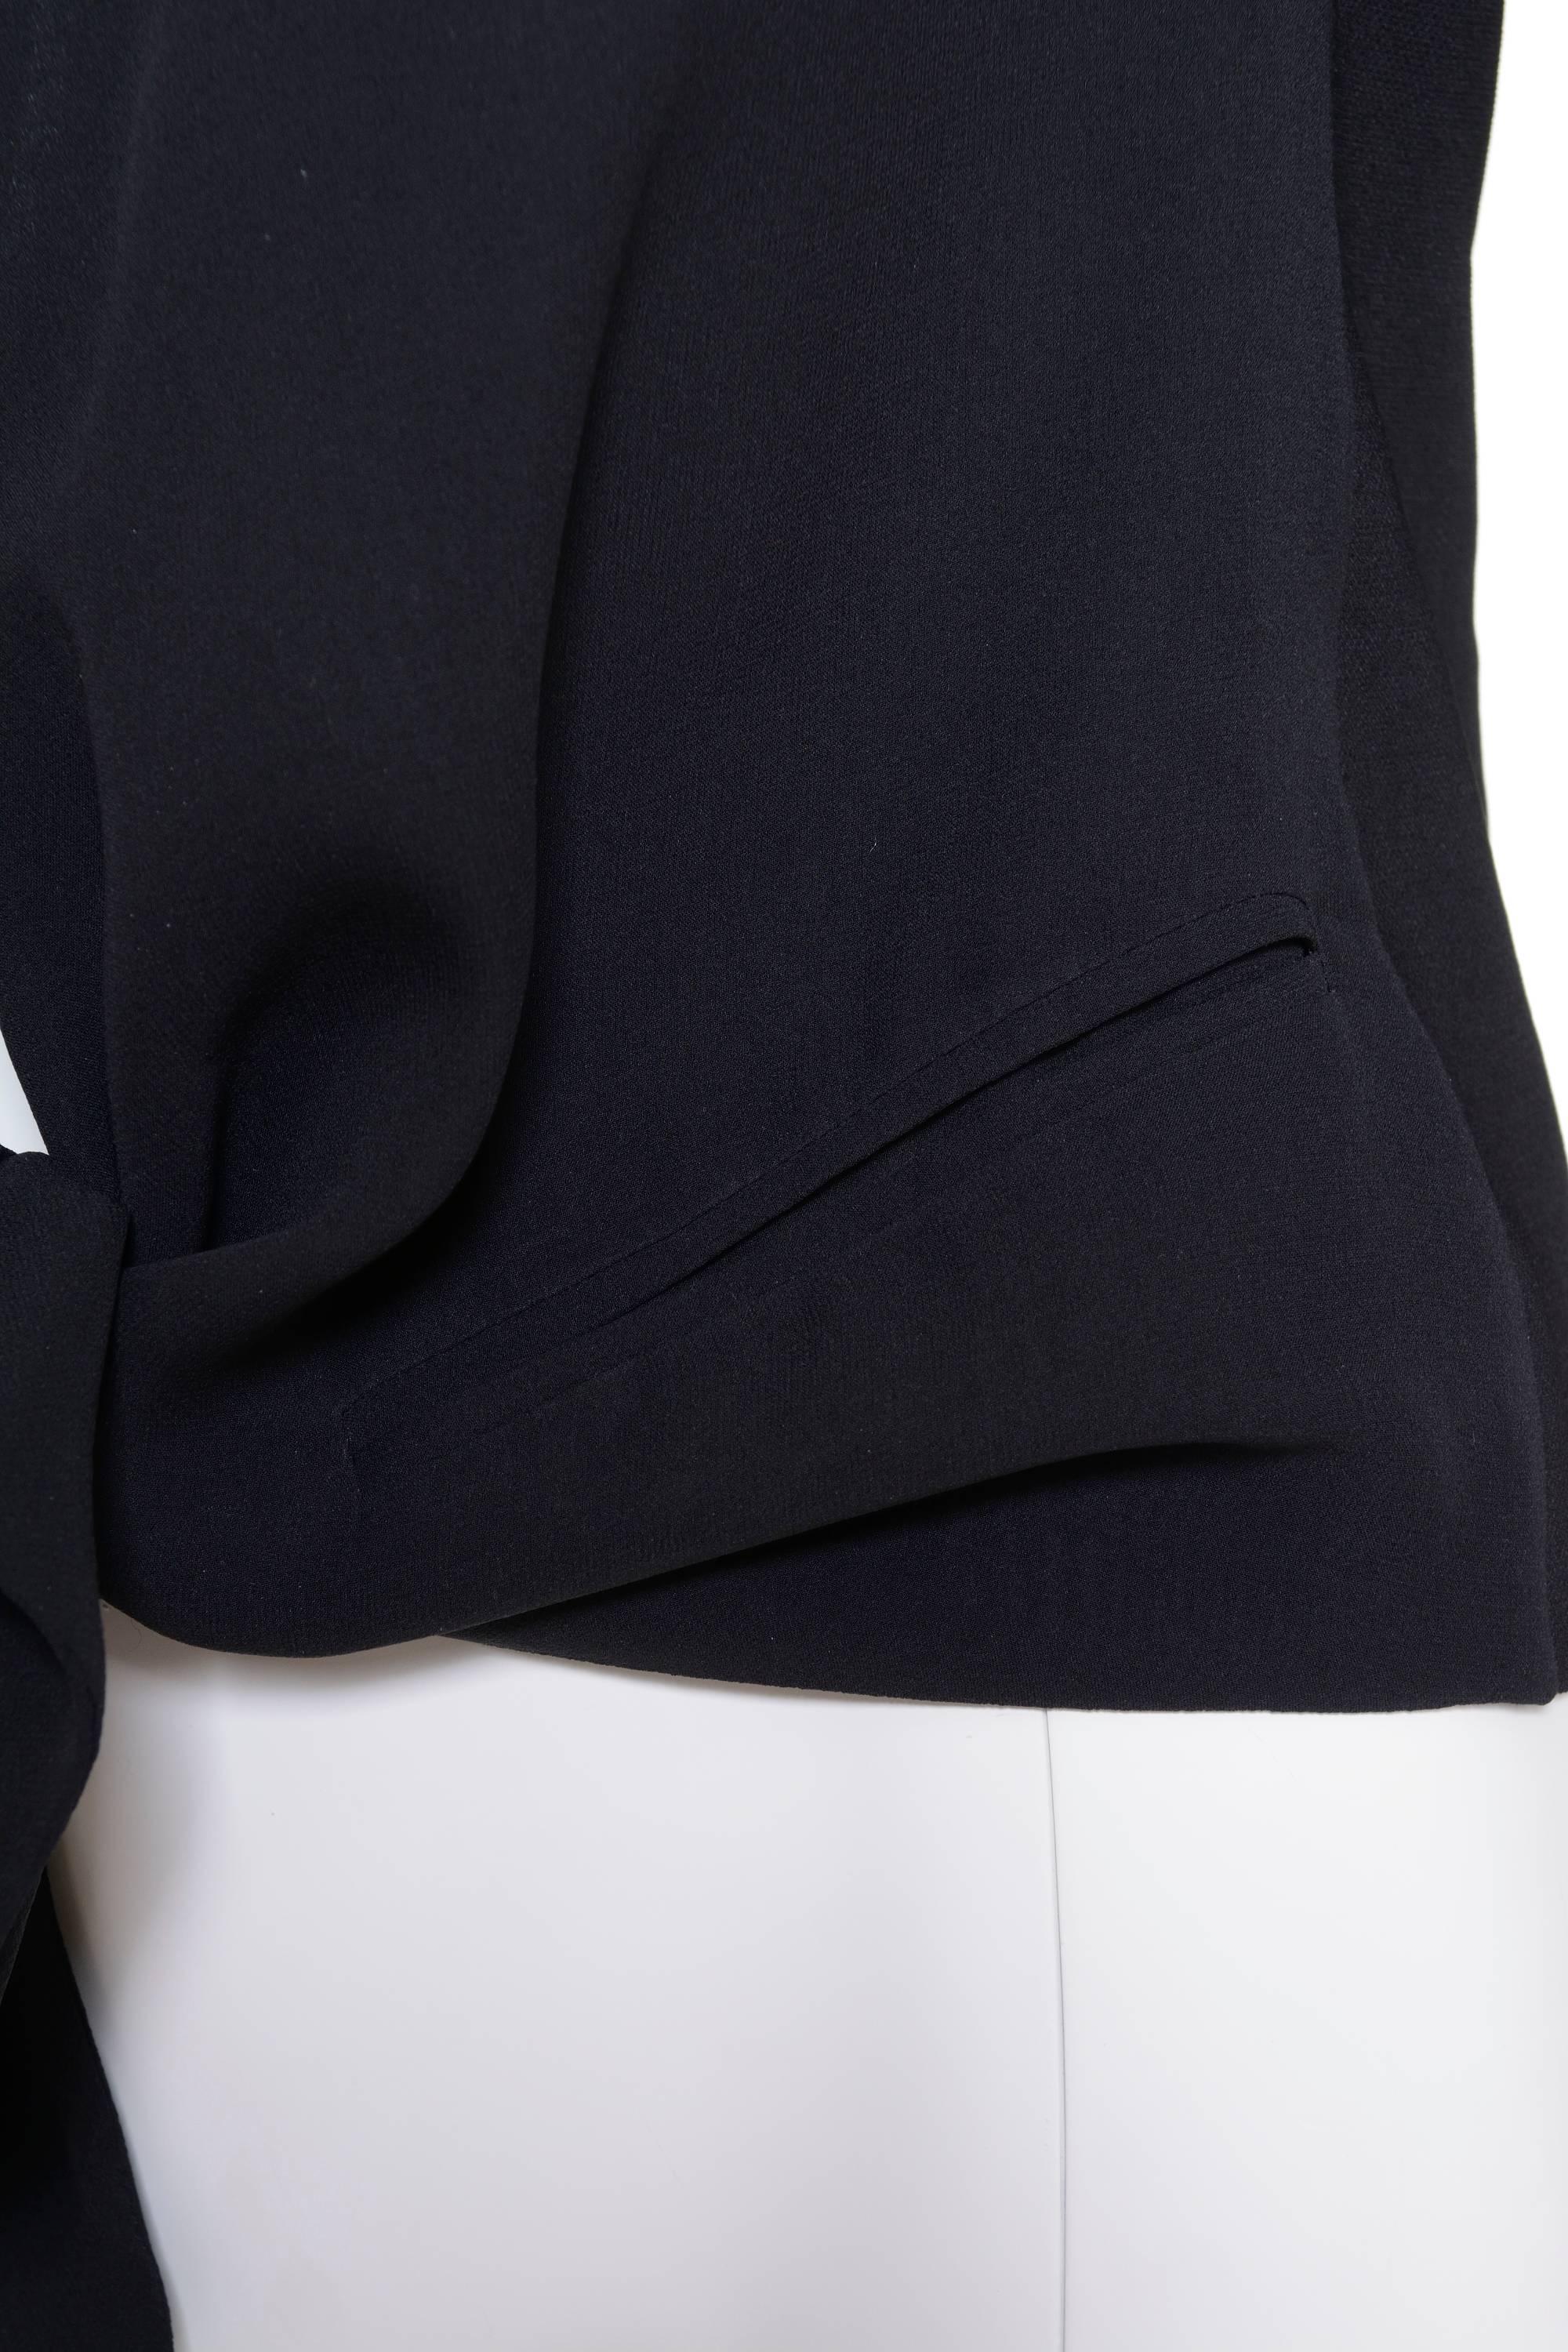 Versace Black Tie Waist Jacket  In Excellent Condition In Milan, Italy